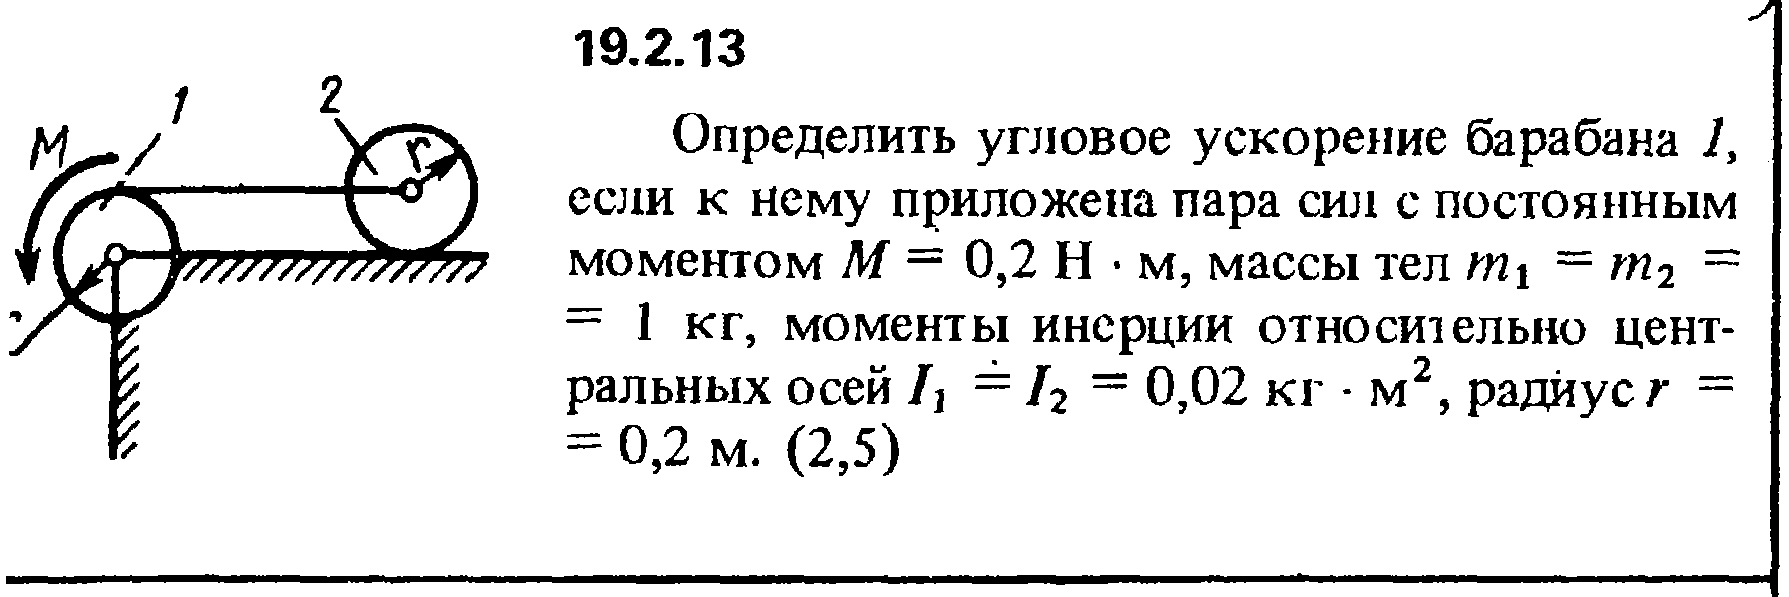 Решение 19.2.13 из сборника (решебника) Кепе О.Е. 1989